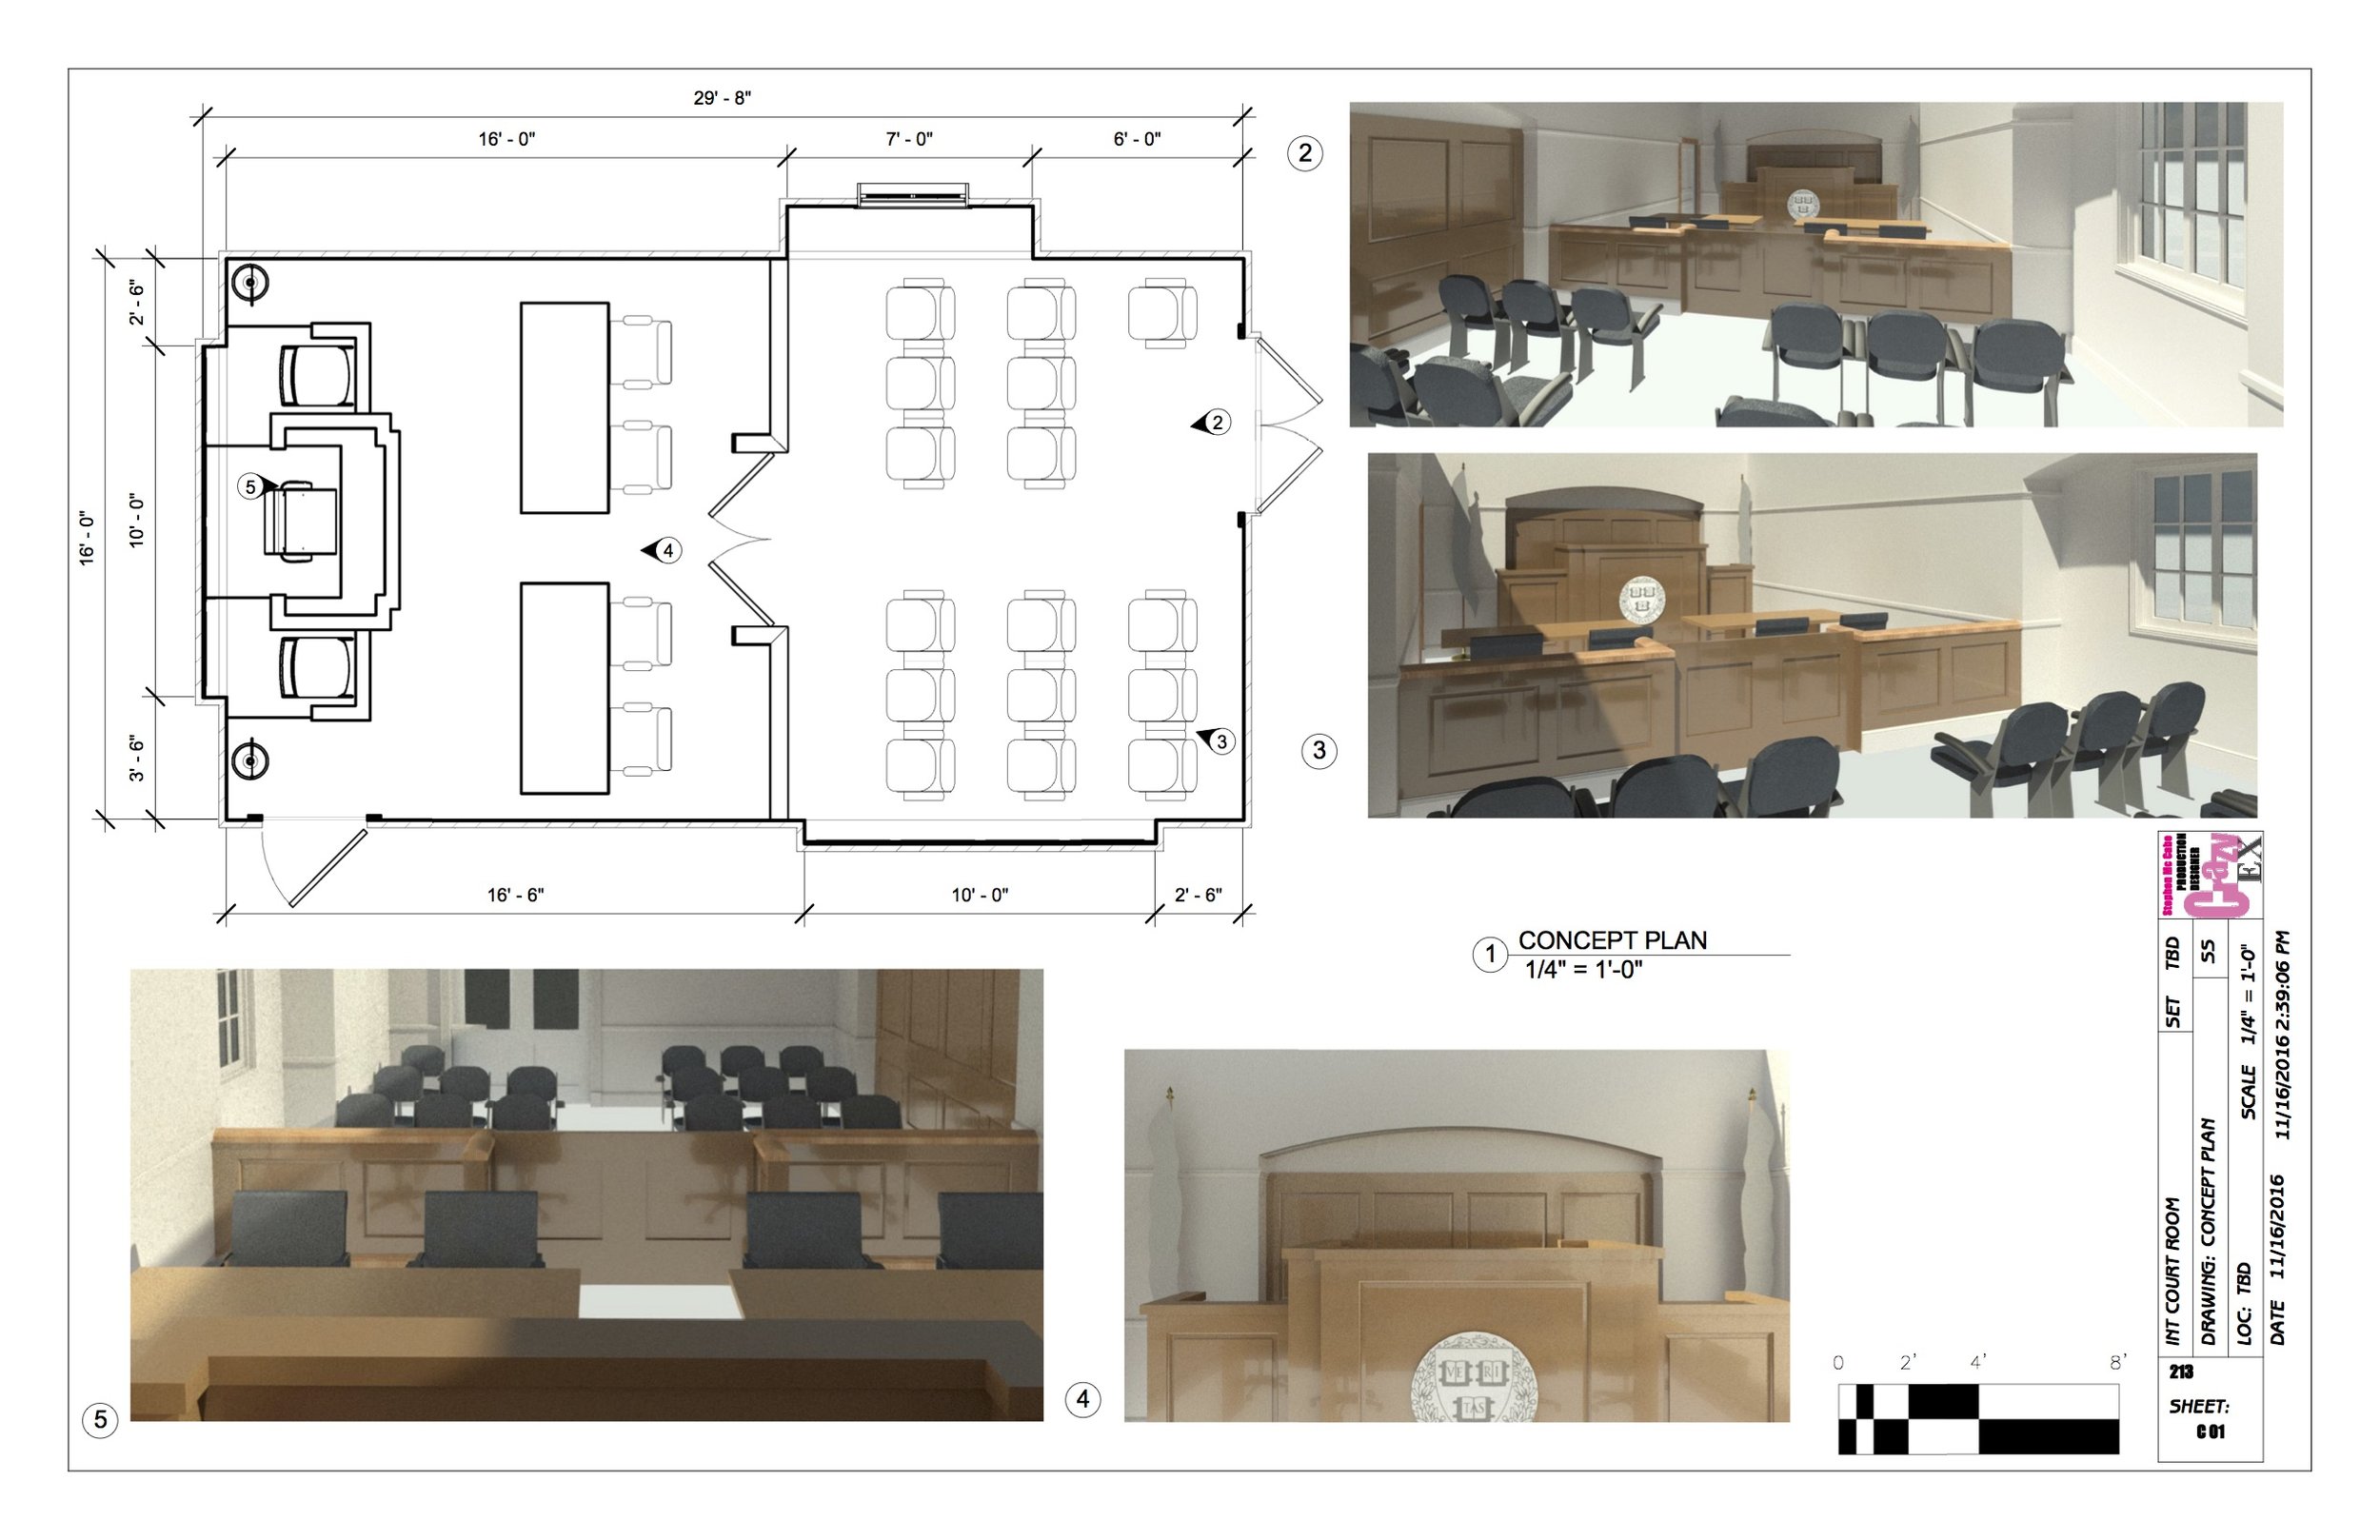 EP_213_278 INT Court  Room Concept Plan_11-16-2016 copy.jpg